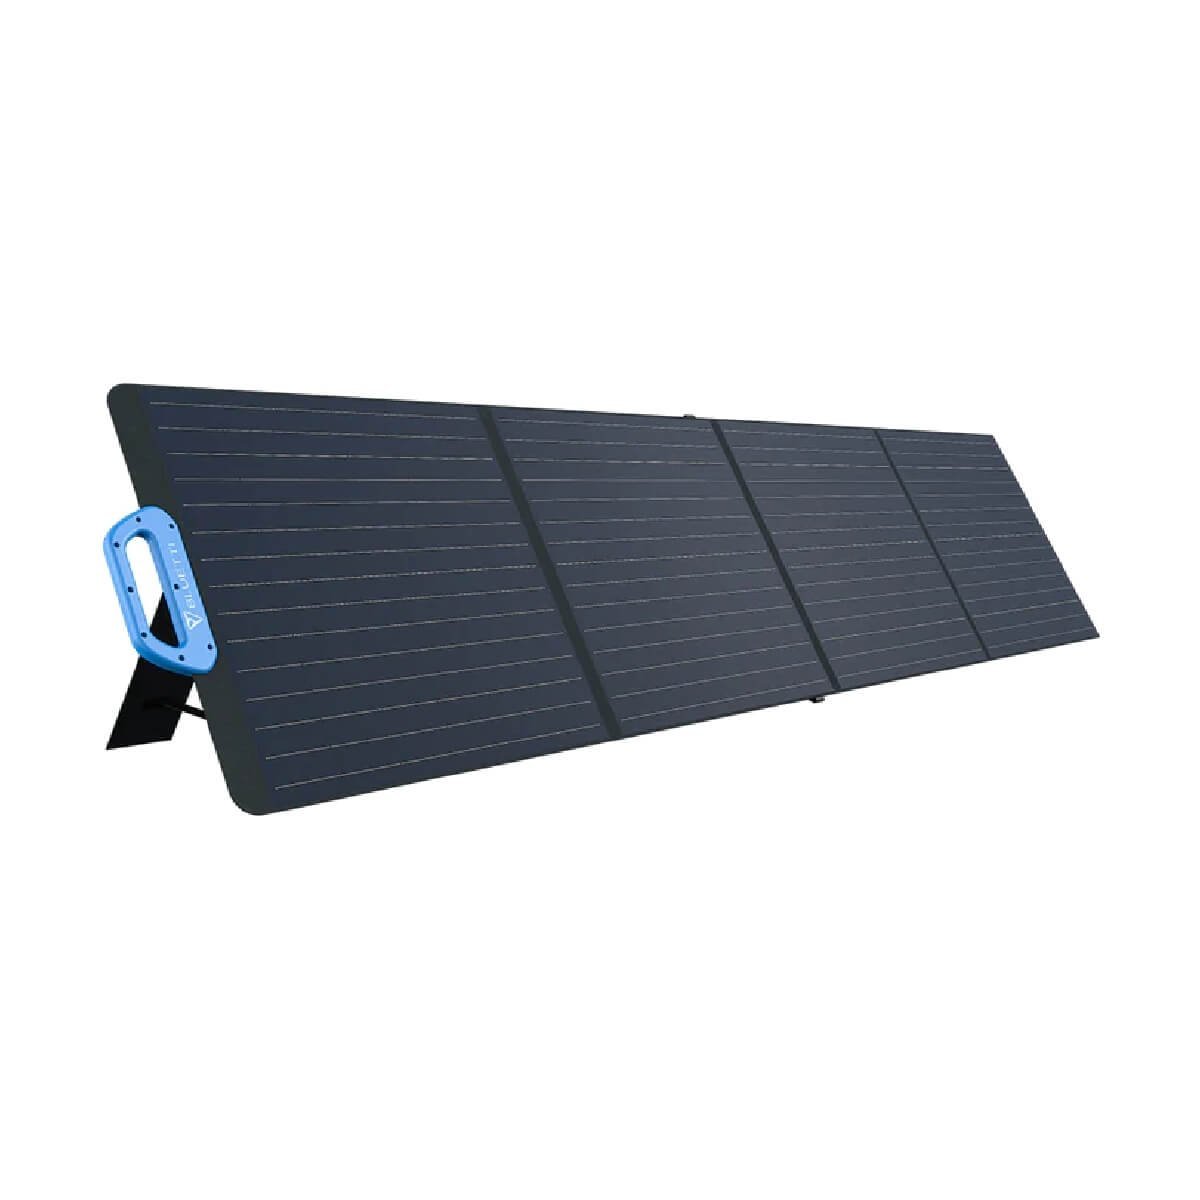 Anker Solar Panel - '625' 100W Portable Monocrystalline Panel